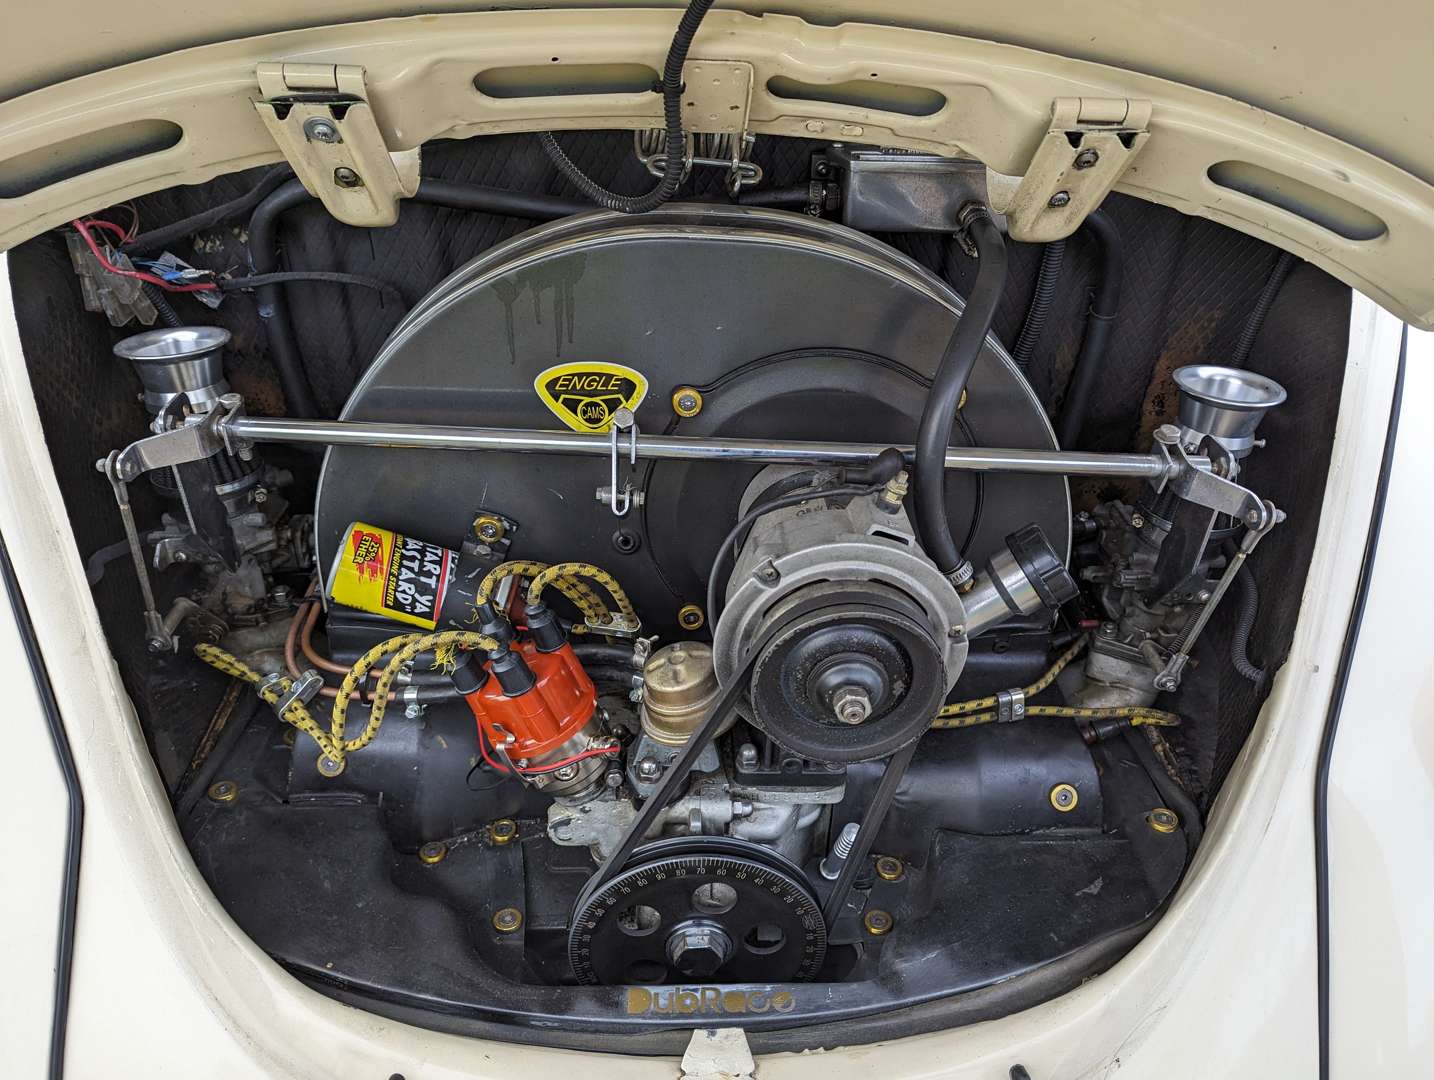 <p>1972 VW BEETLE</p>